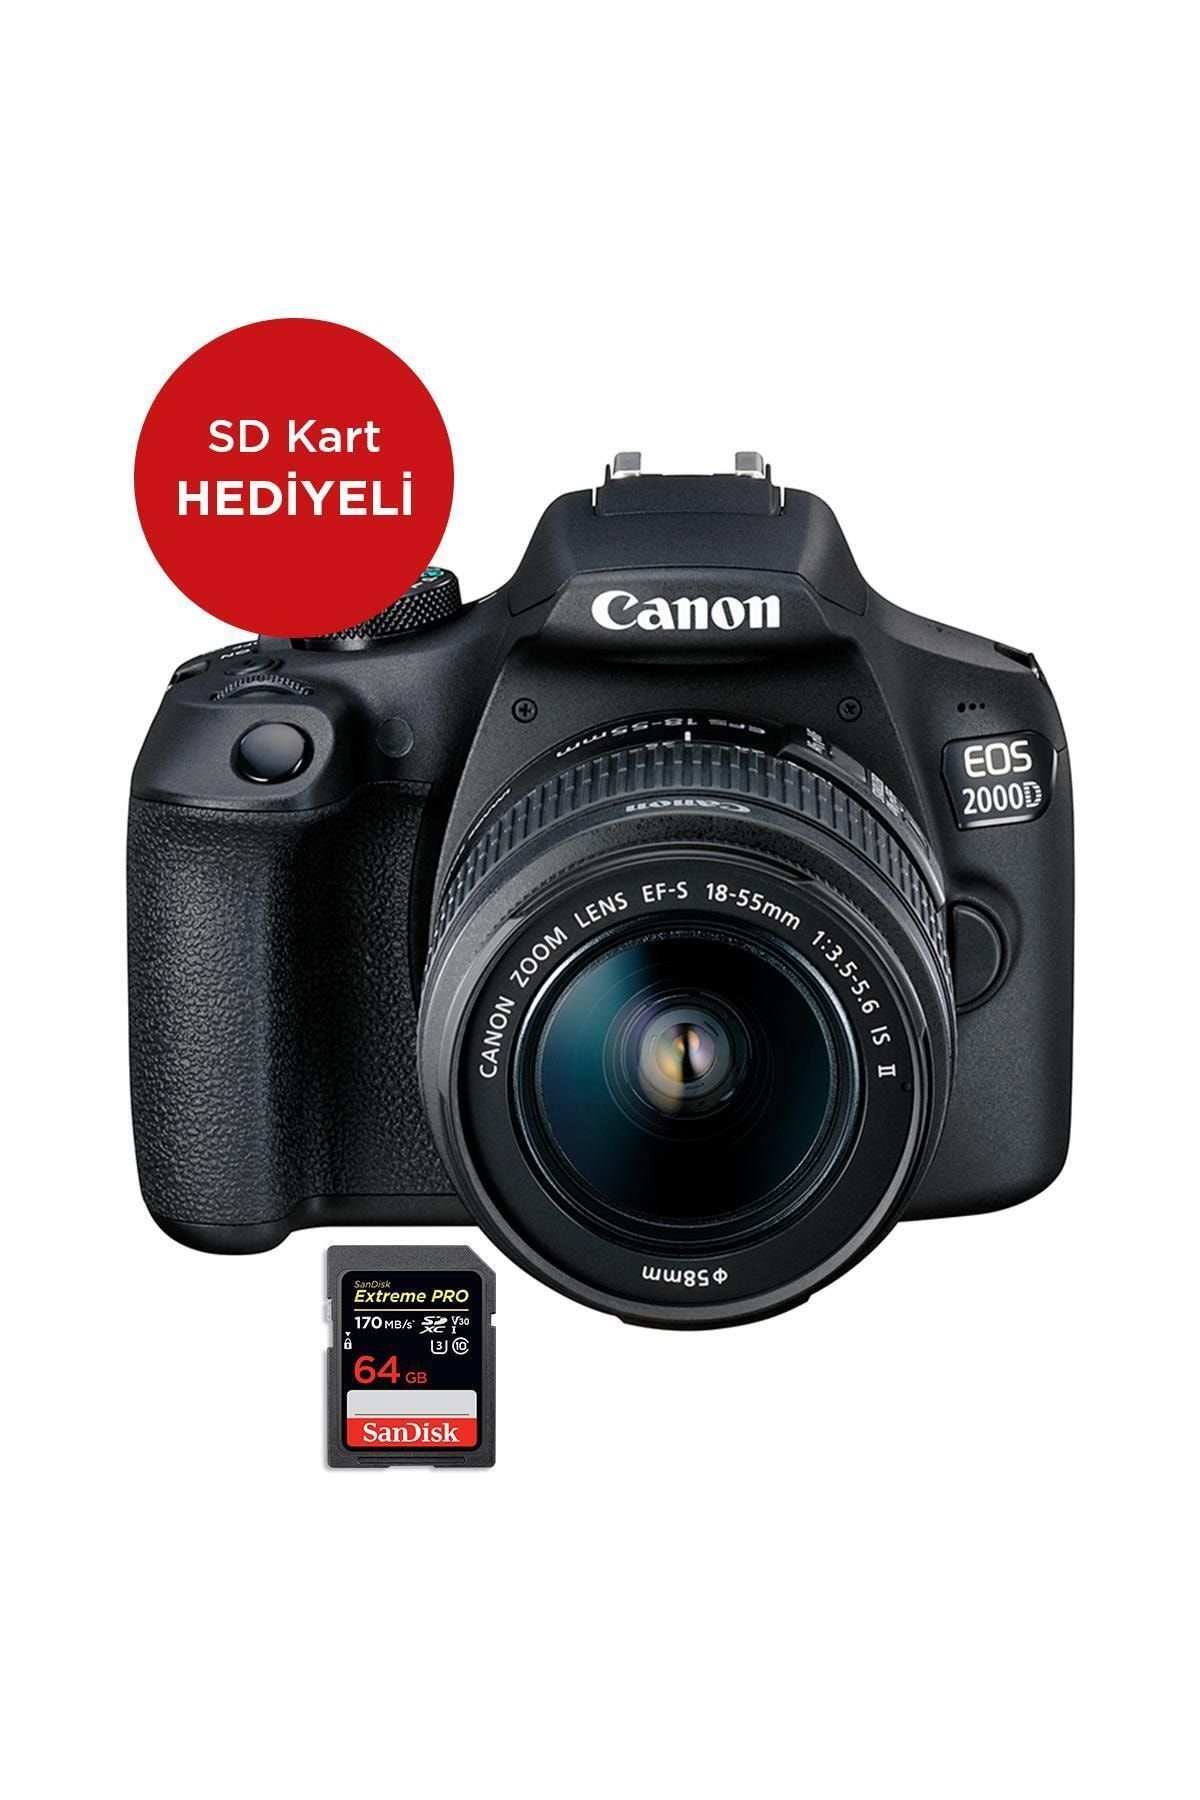 Canon EOS 2000D IS Kit Fotoğraf Makinesi (SD Kart Hediyeli) (Canon Eurasia Garantili)